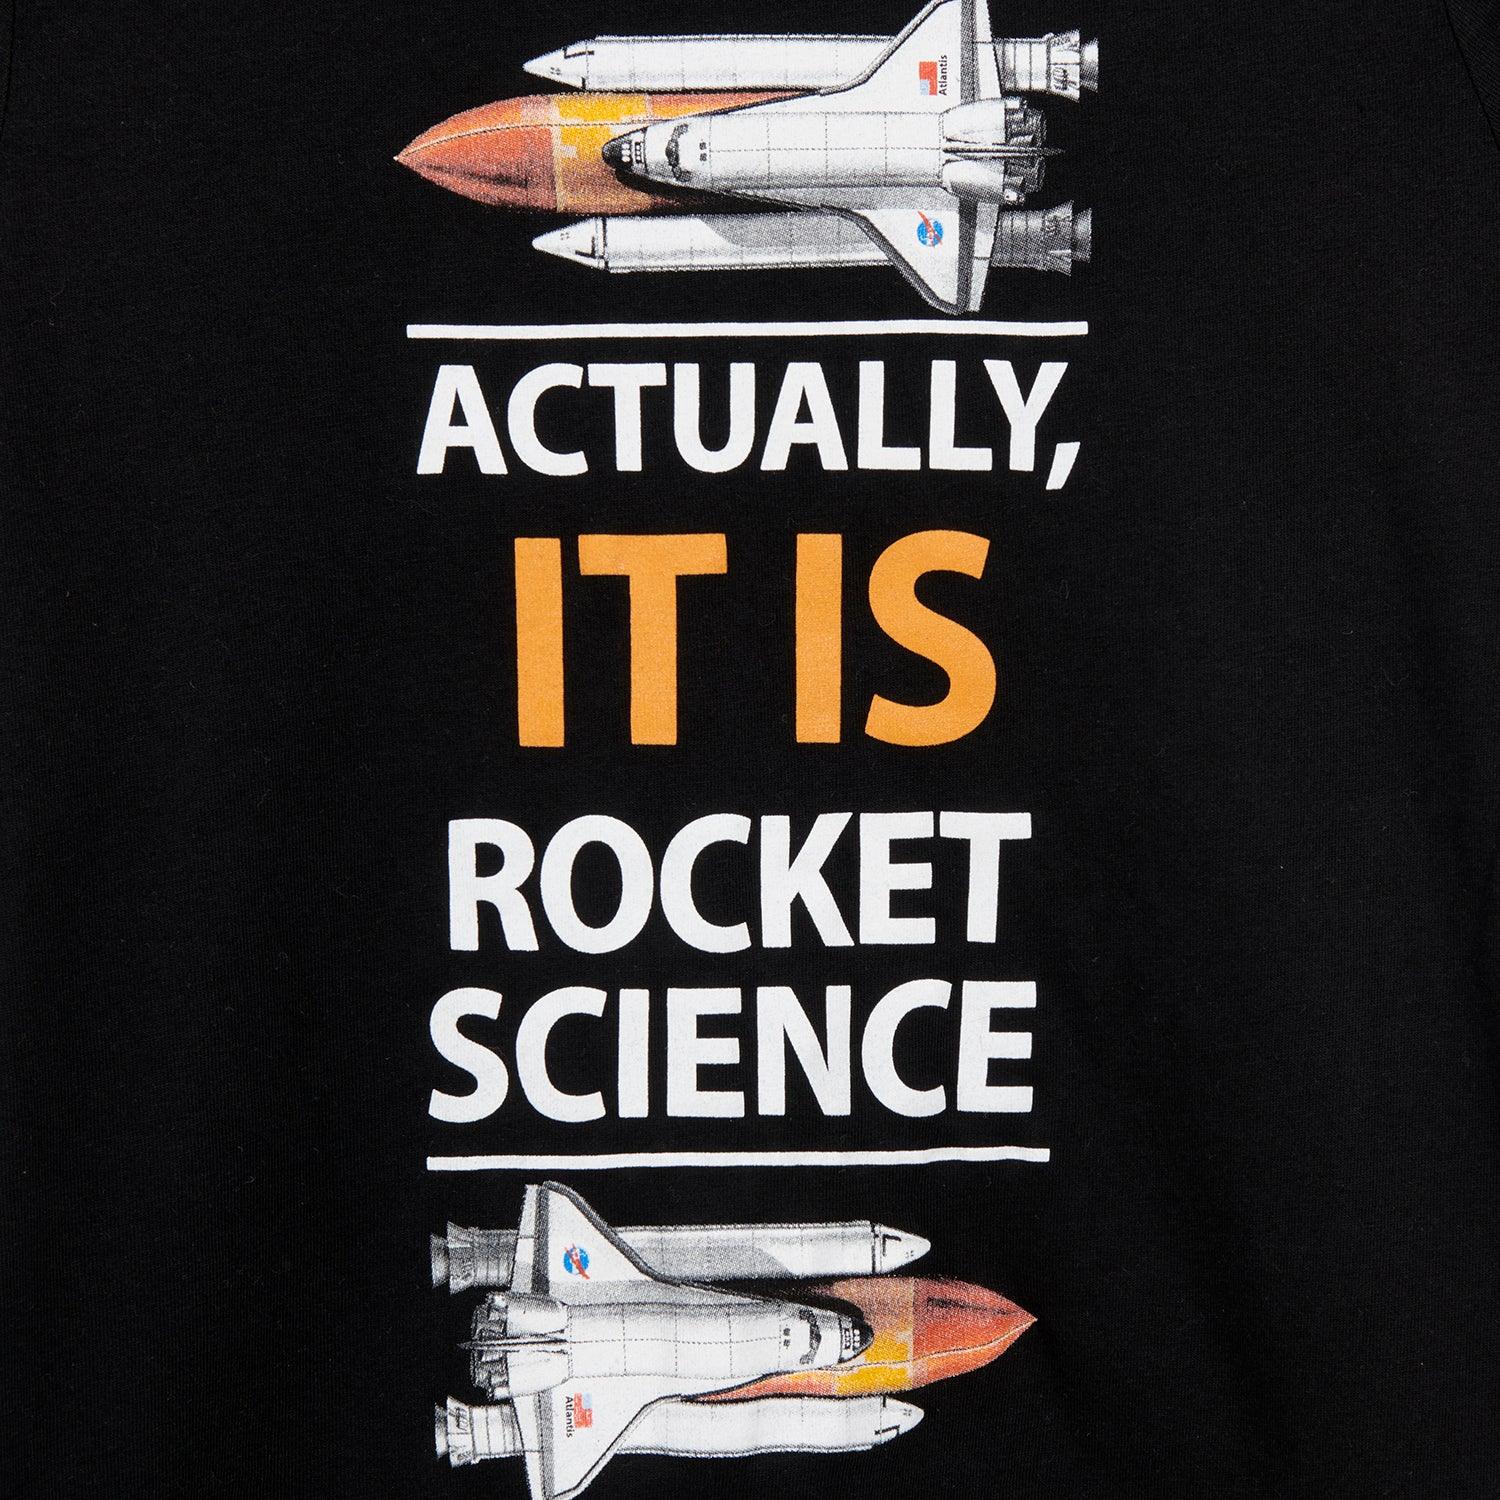 Science Museum NASA Rocket Science Kids T-Shirt - Clothing - Science Museum Shop